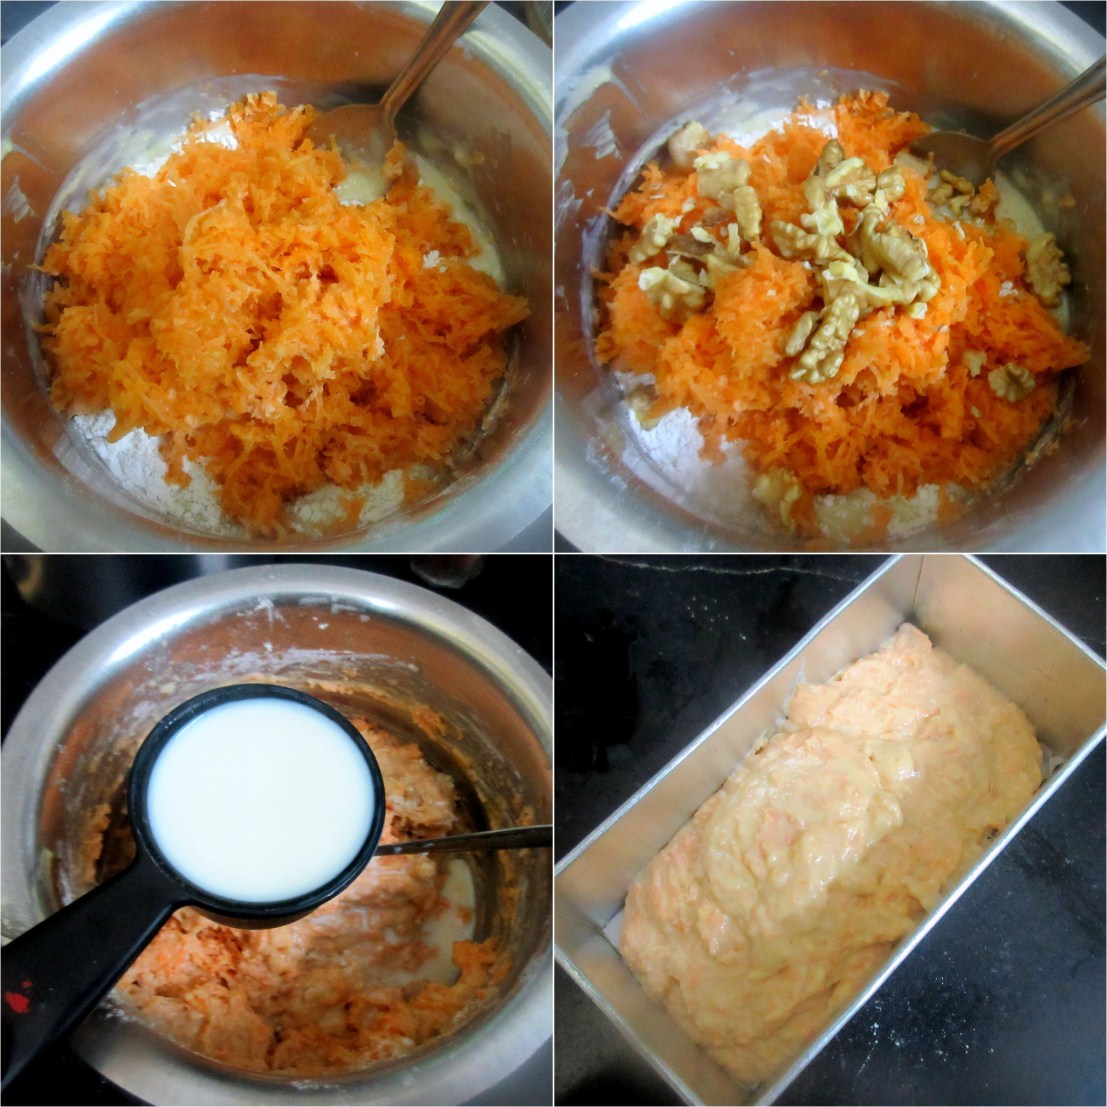 How to make Eggless Carrot Loaf Cake 2